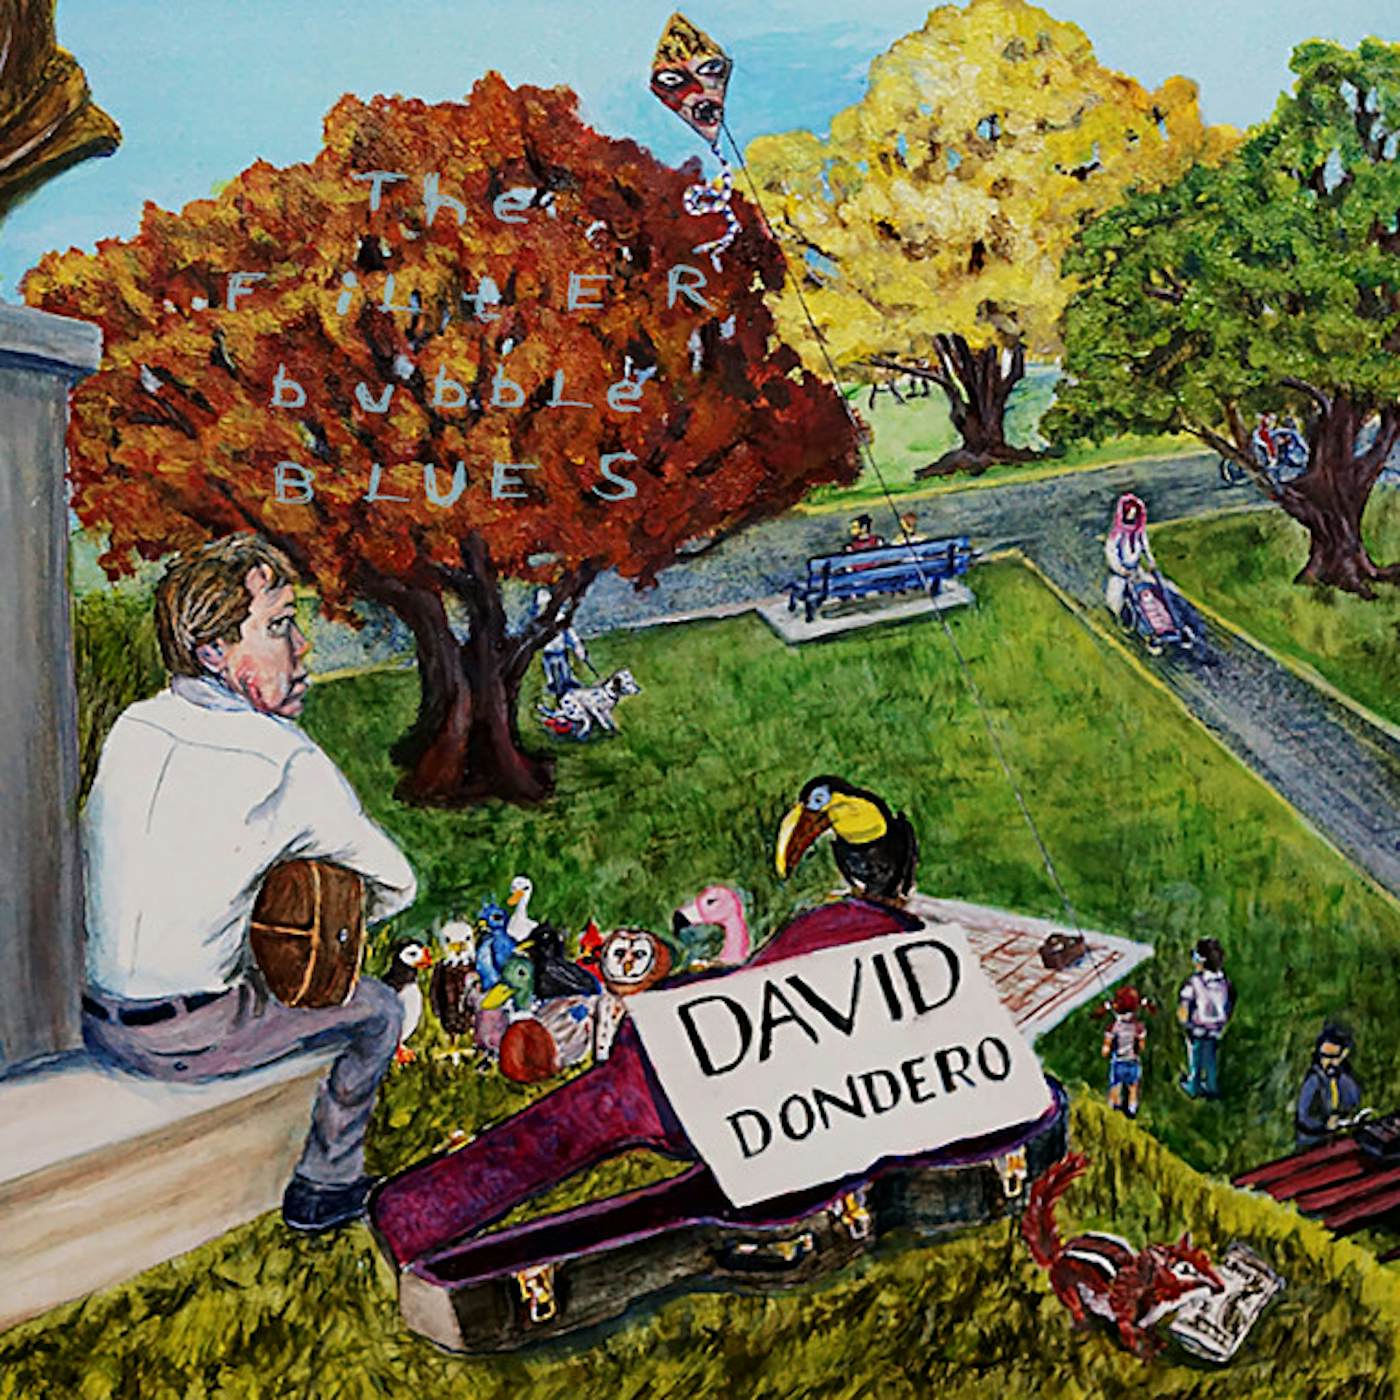 David Dondero FILTER BUBBLE BLUES CD